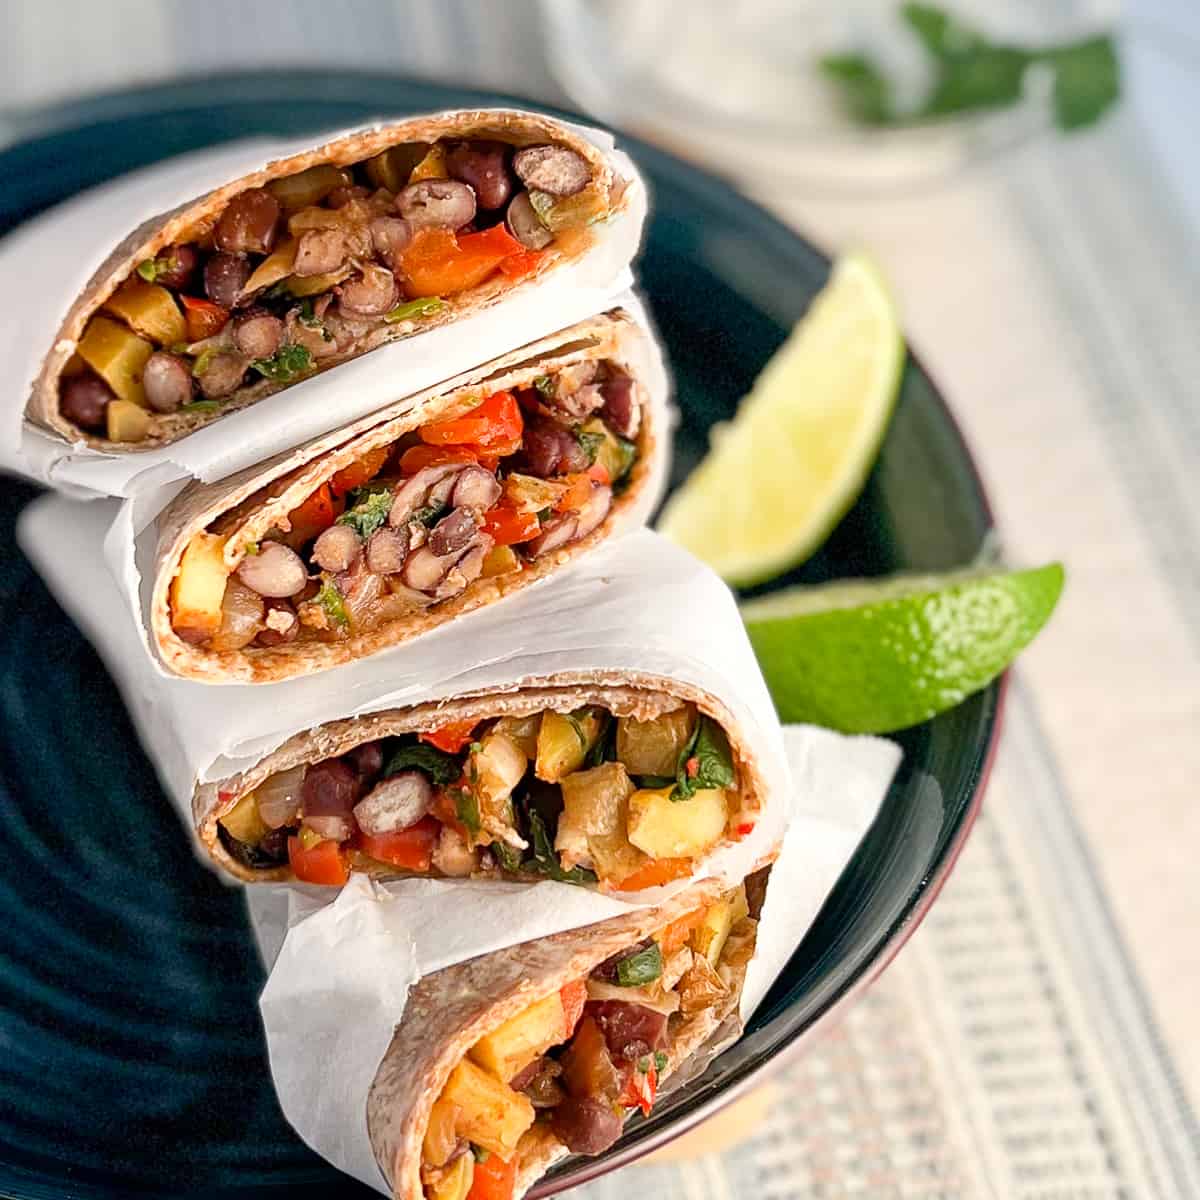 https://danielsplate.com/wp-content/uploads/2021/04/hearty-breakfast-burrito-4.jpg